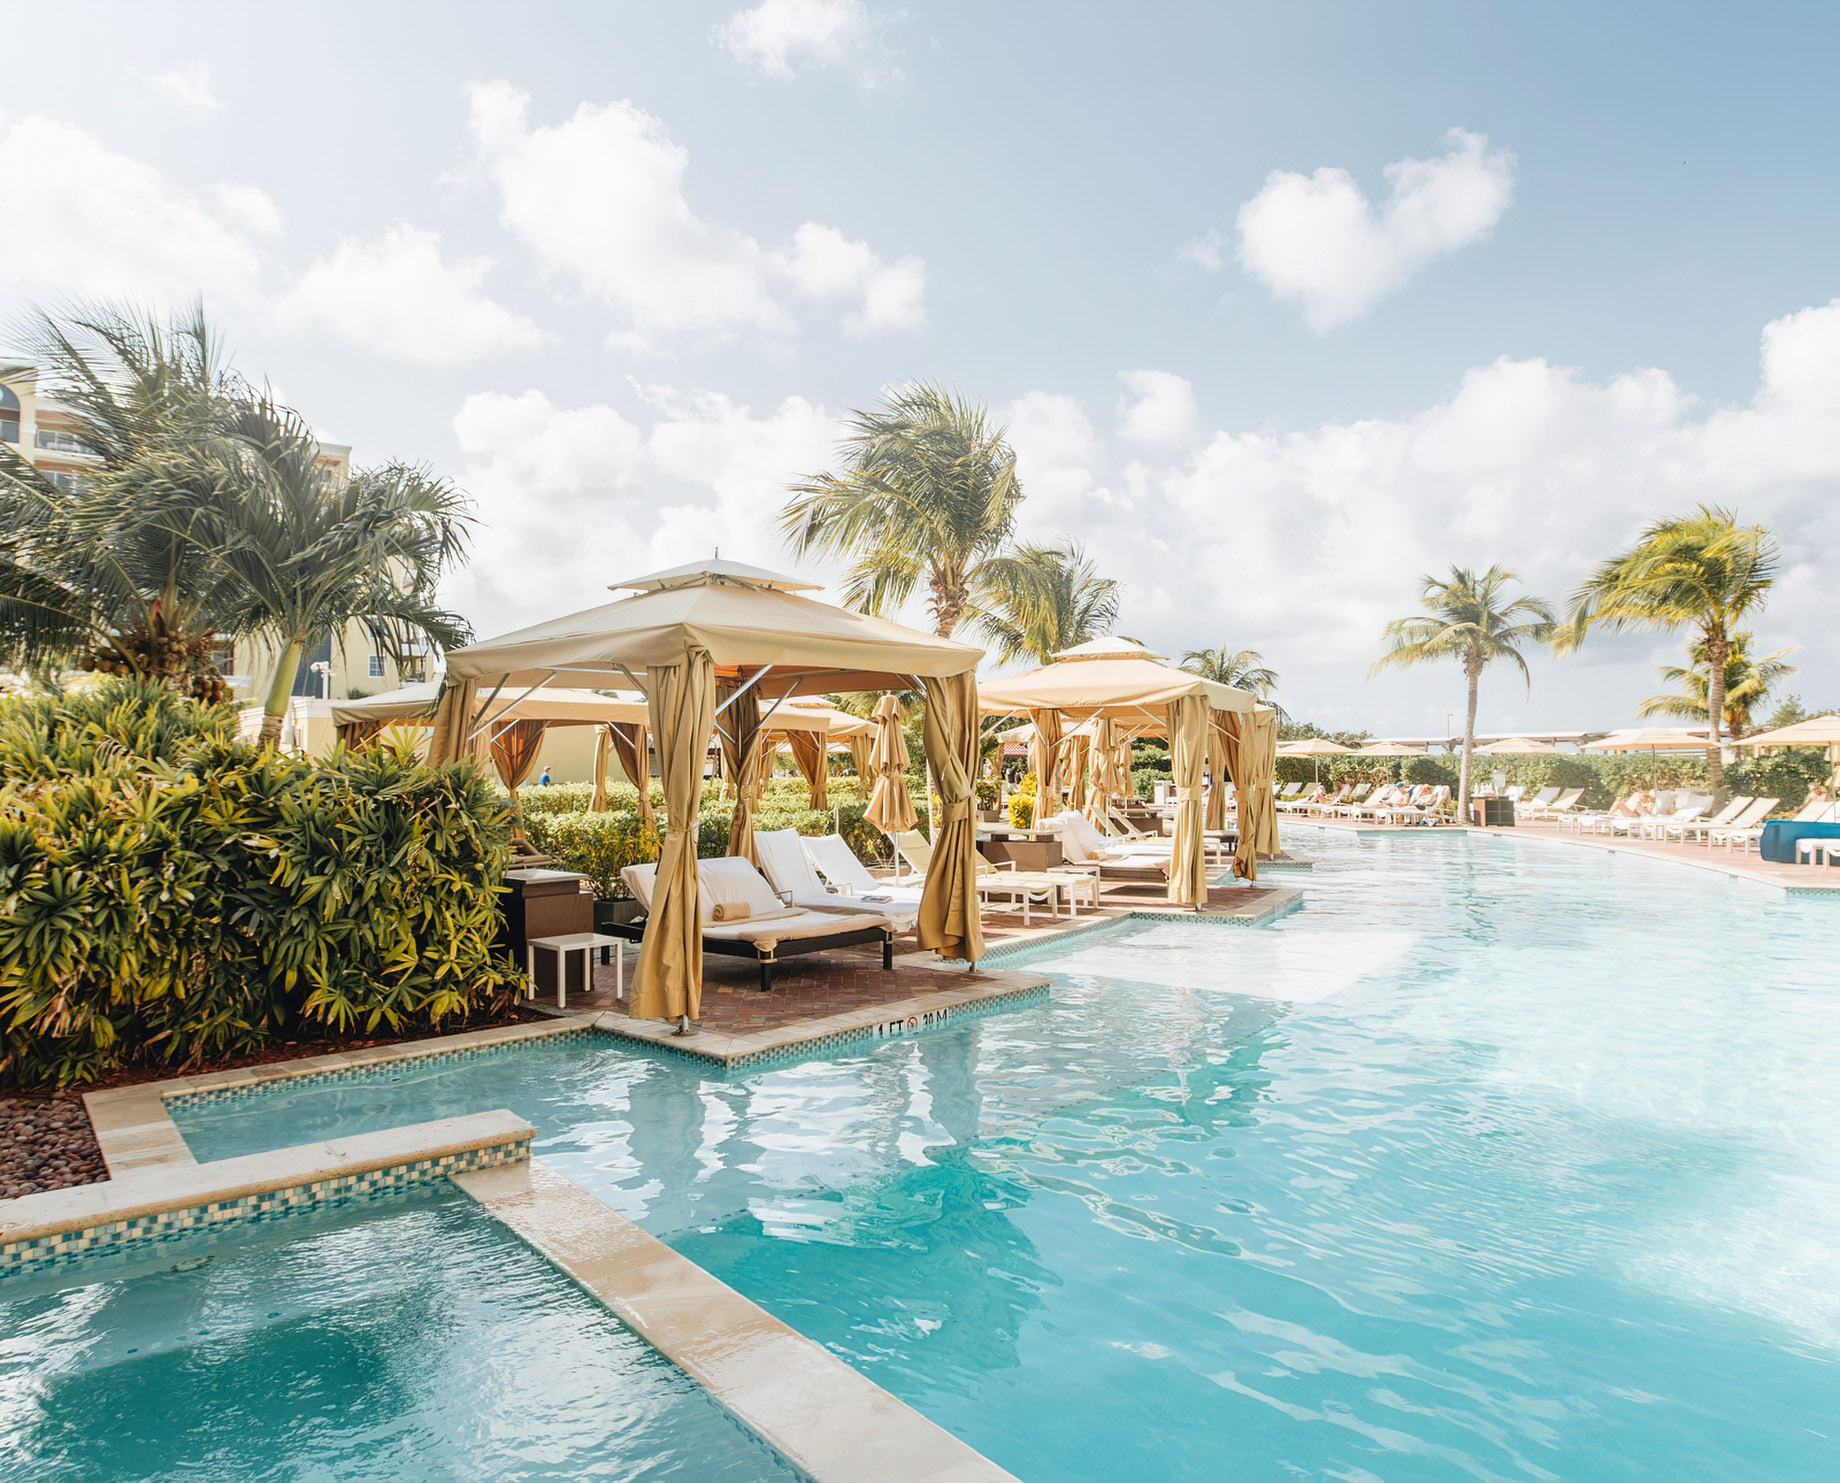 The Ritz-Carlton, Aruba Resort - Palm Beach, Aruba - Pool Cabanas